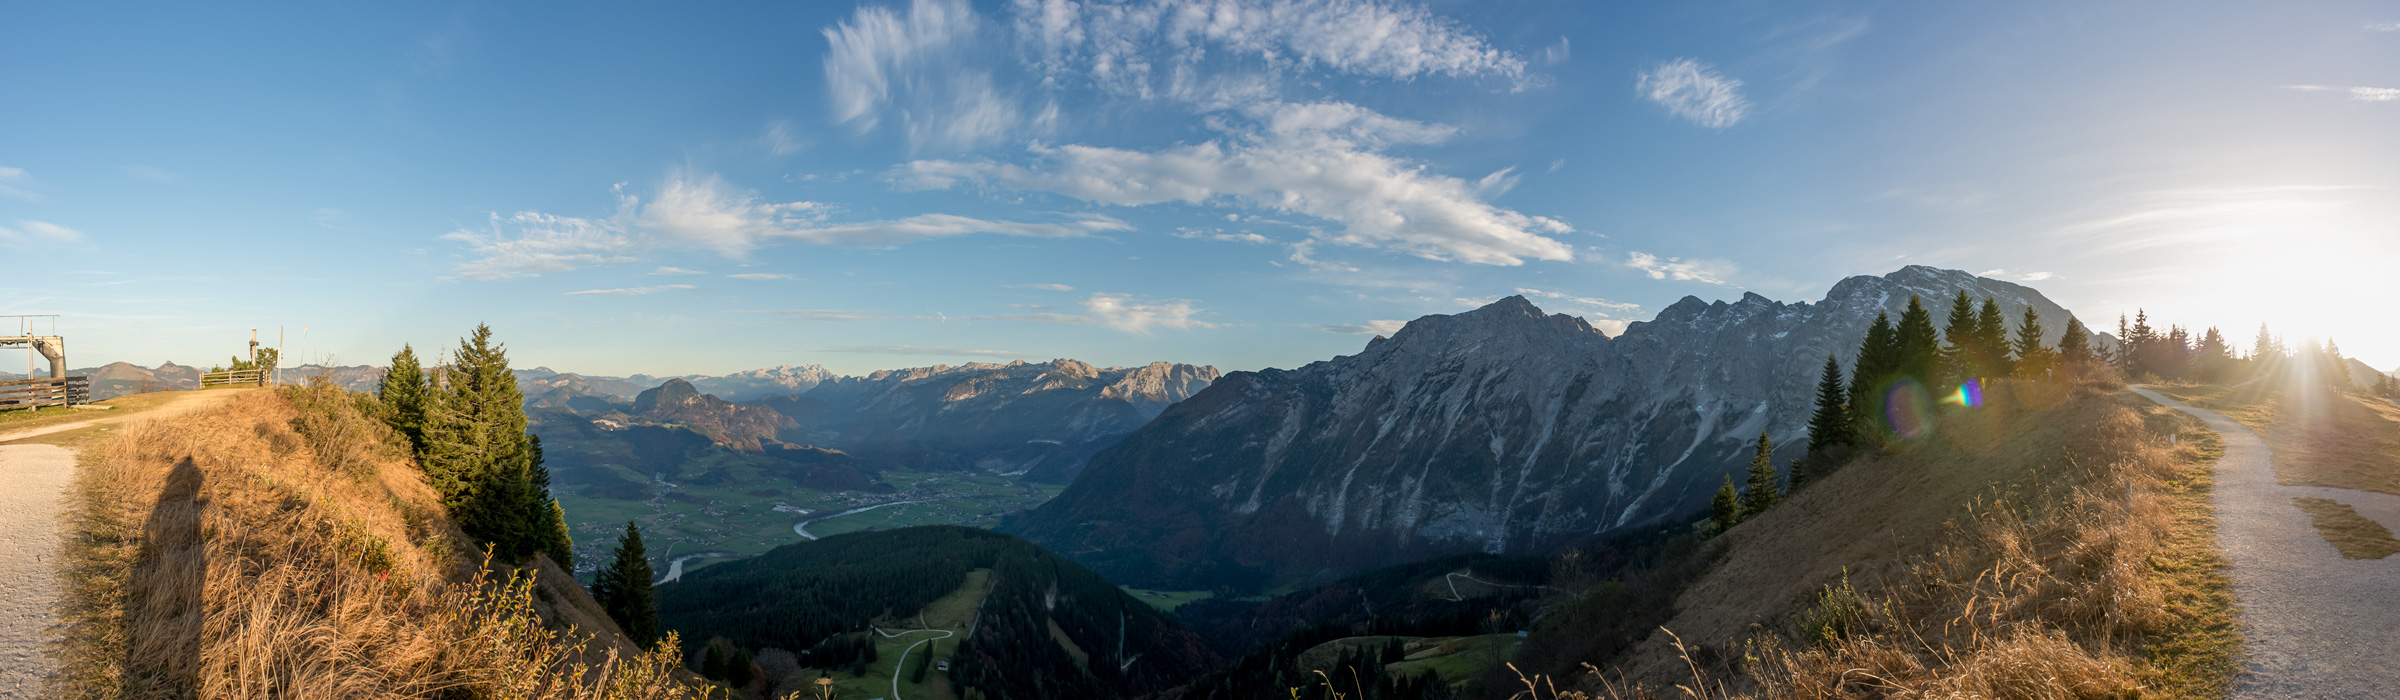 Panoramaufnahme der Landschaft in Berchtesgaden